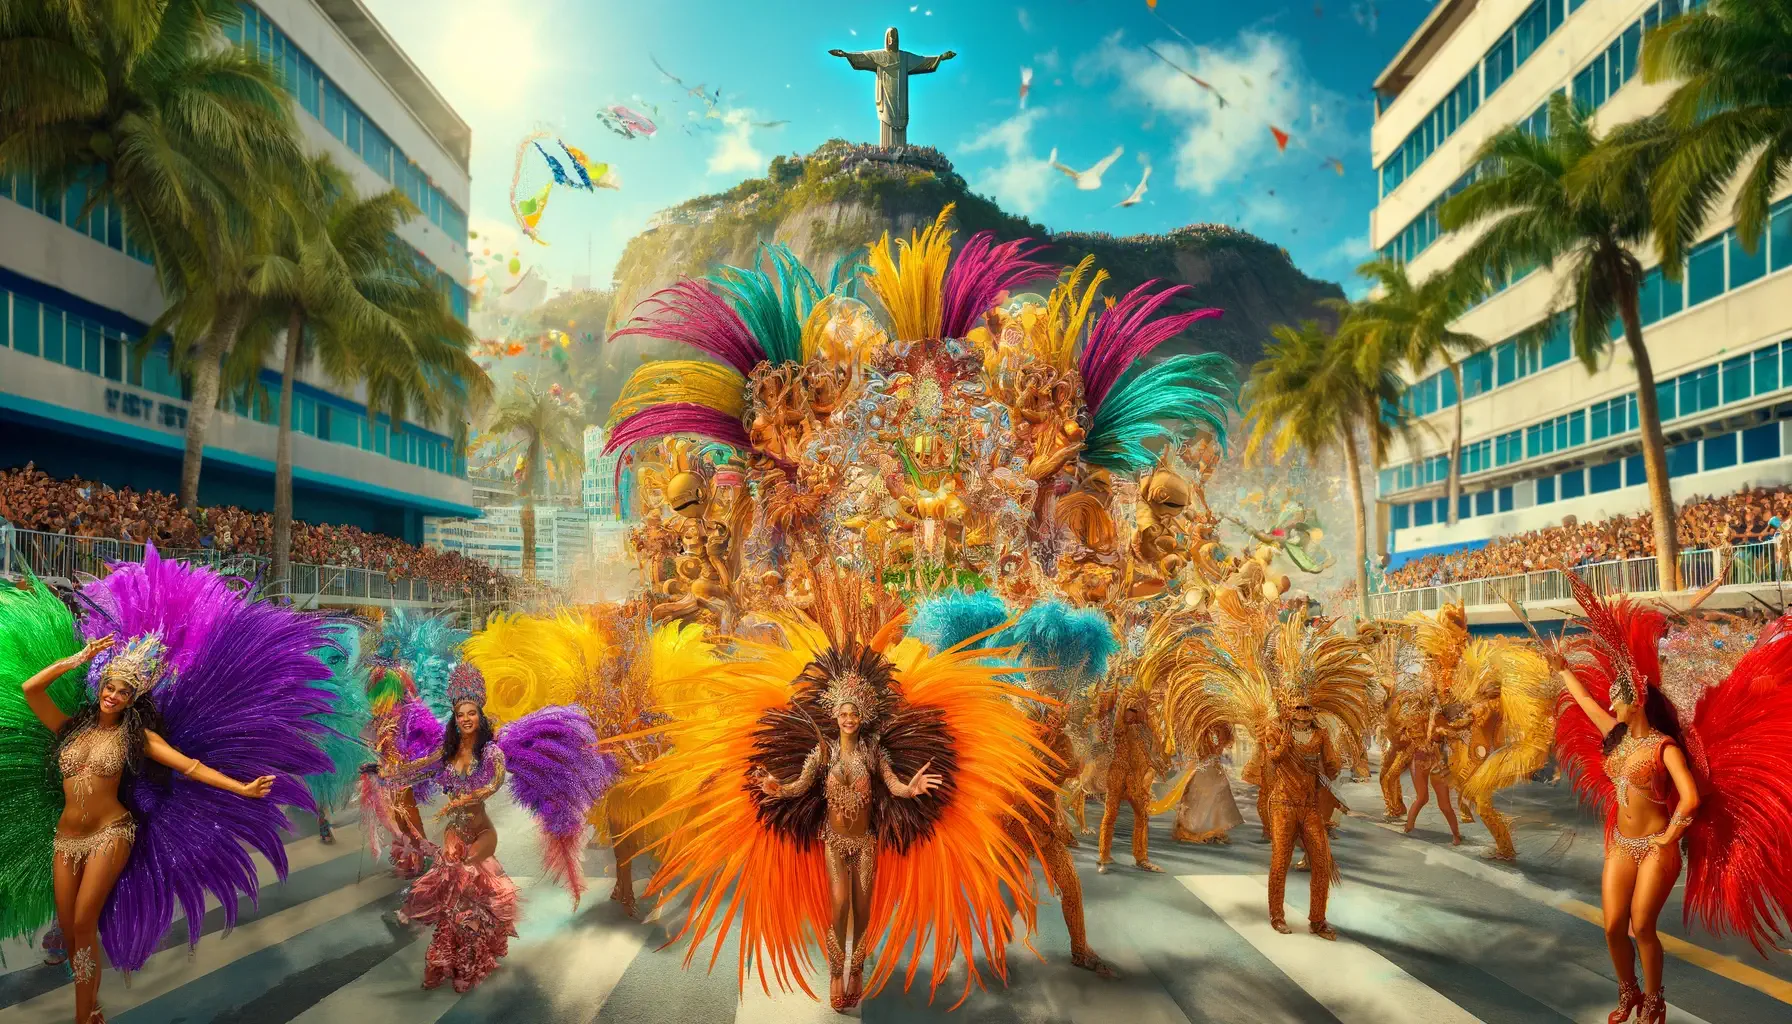 Travel AI Art Examples vibrant, colorful carnival in Rio de Janeiro